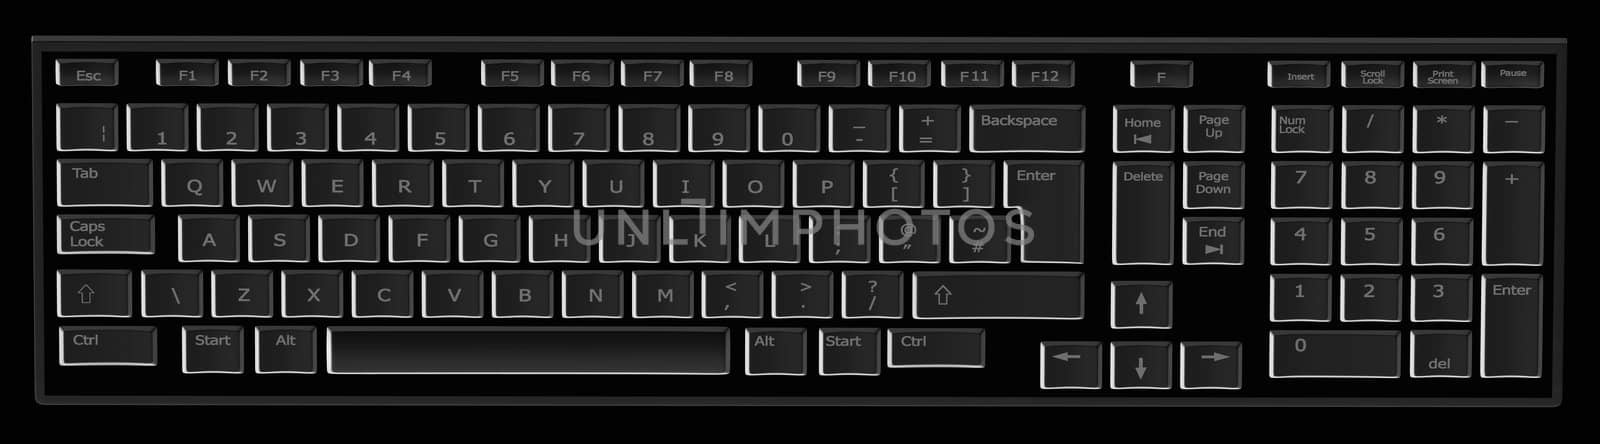 Computer keyboard in black and keys in grey